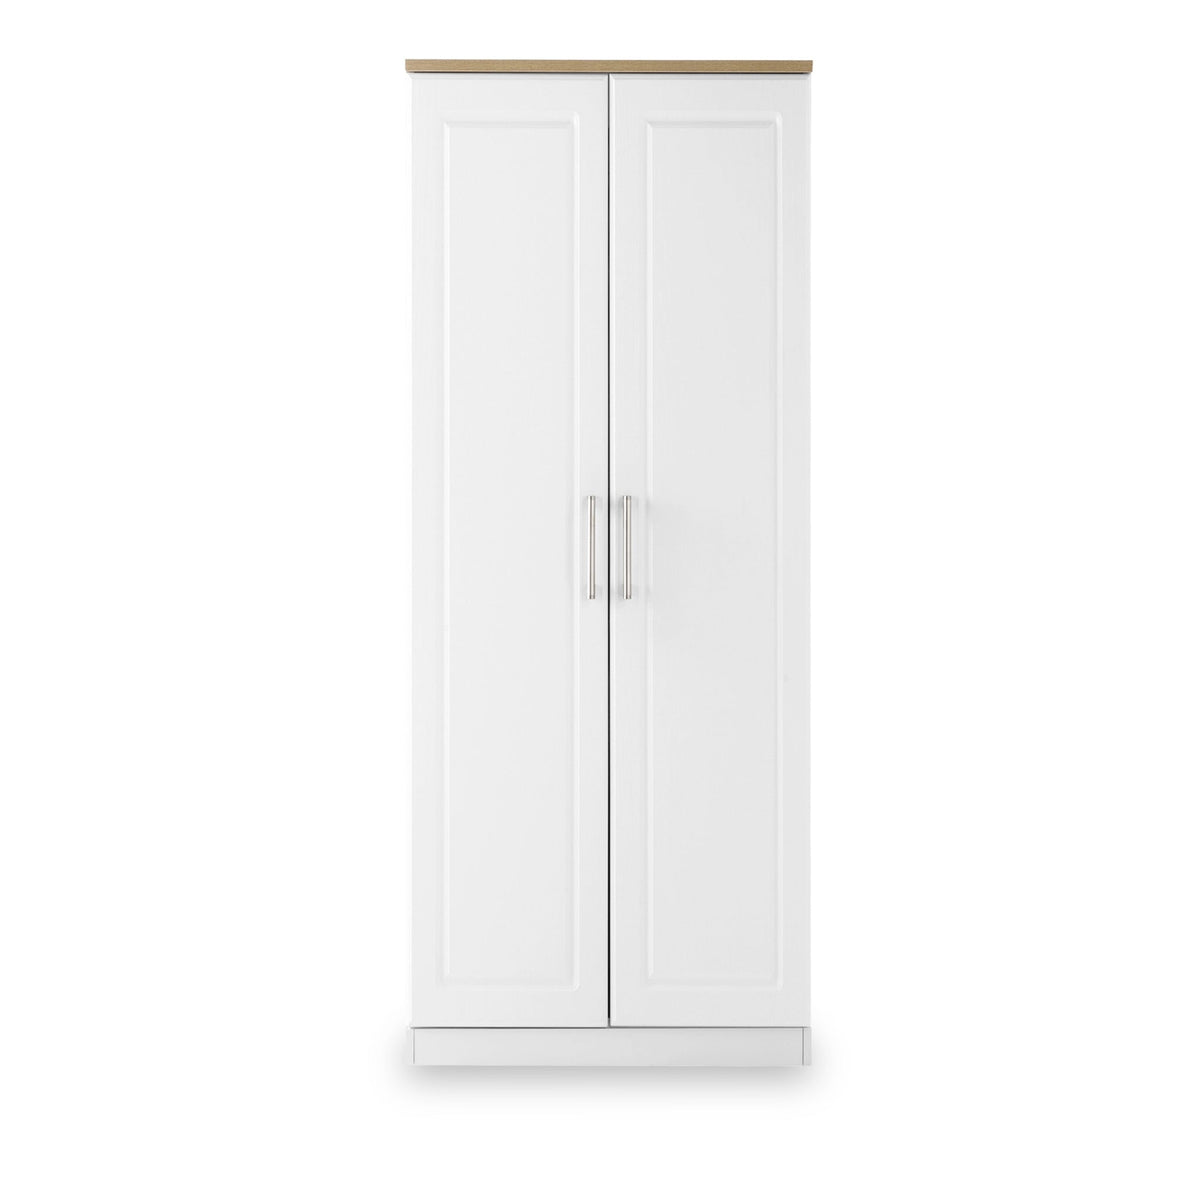 Talland White 2 Door Wardrobe from Roseland